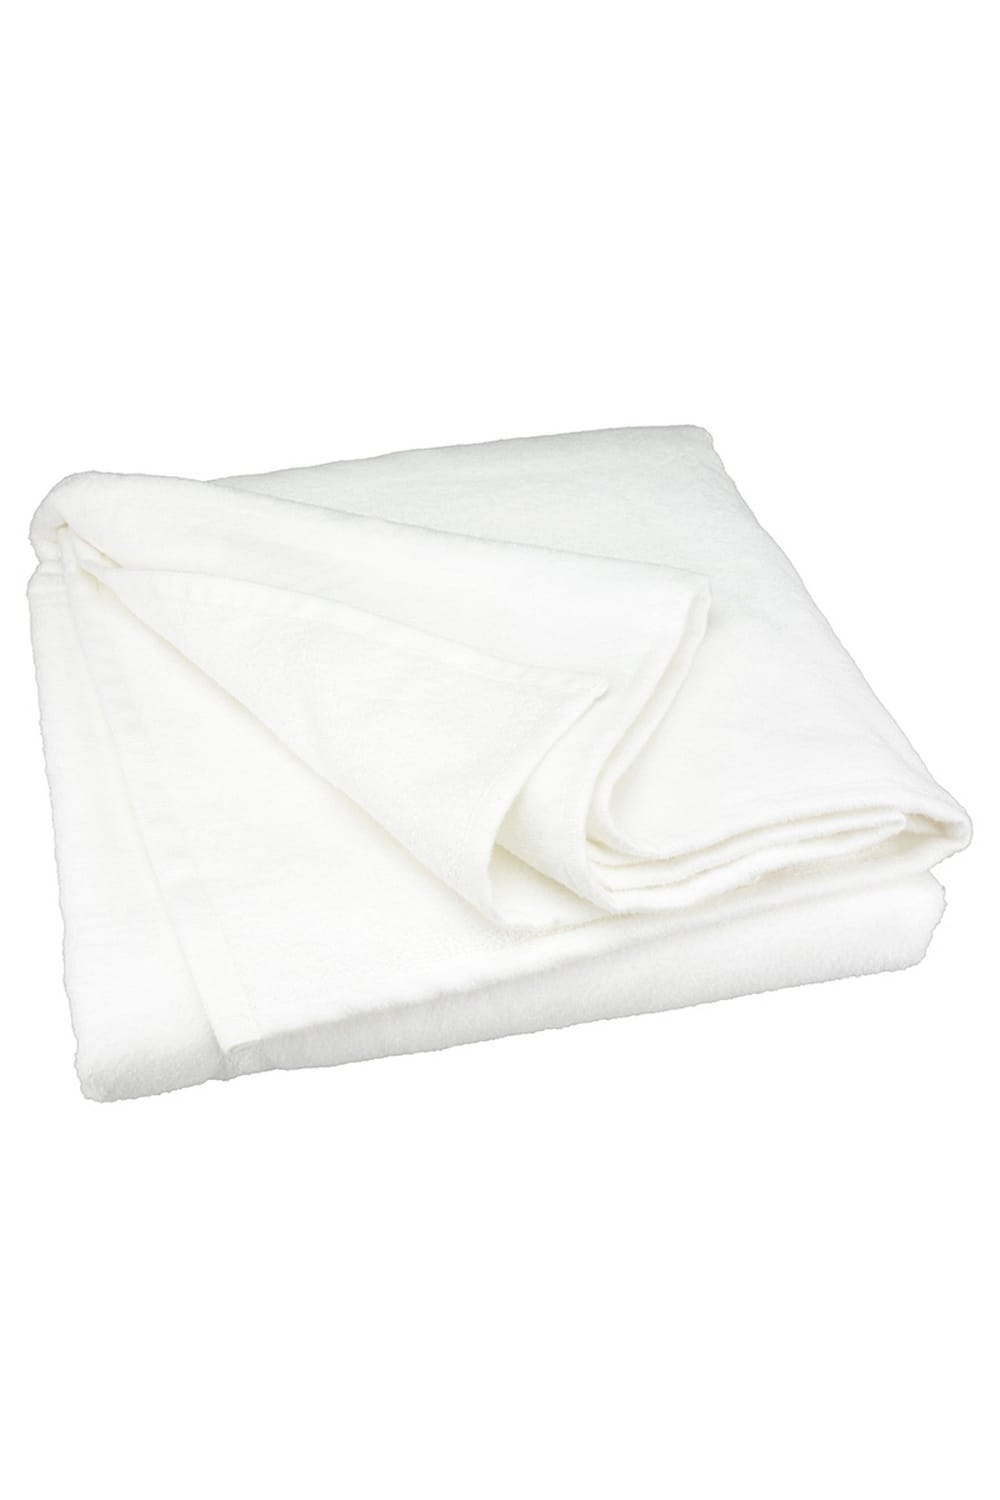 A&R Towels Subli-Me All-over Beach Towel (White) (Beach)